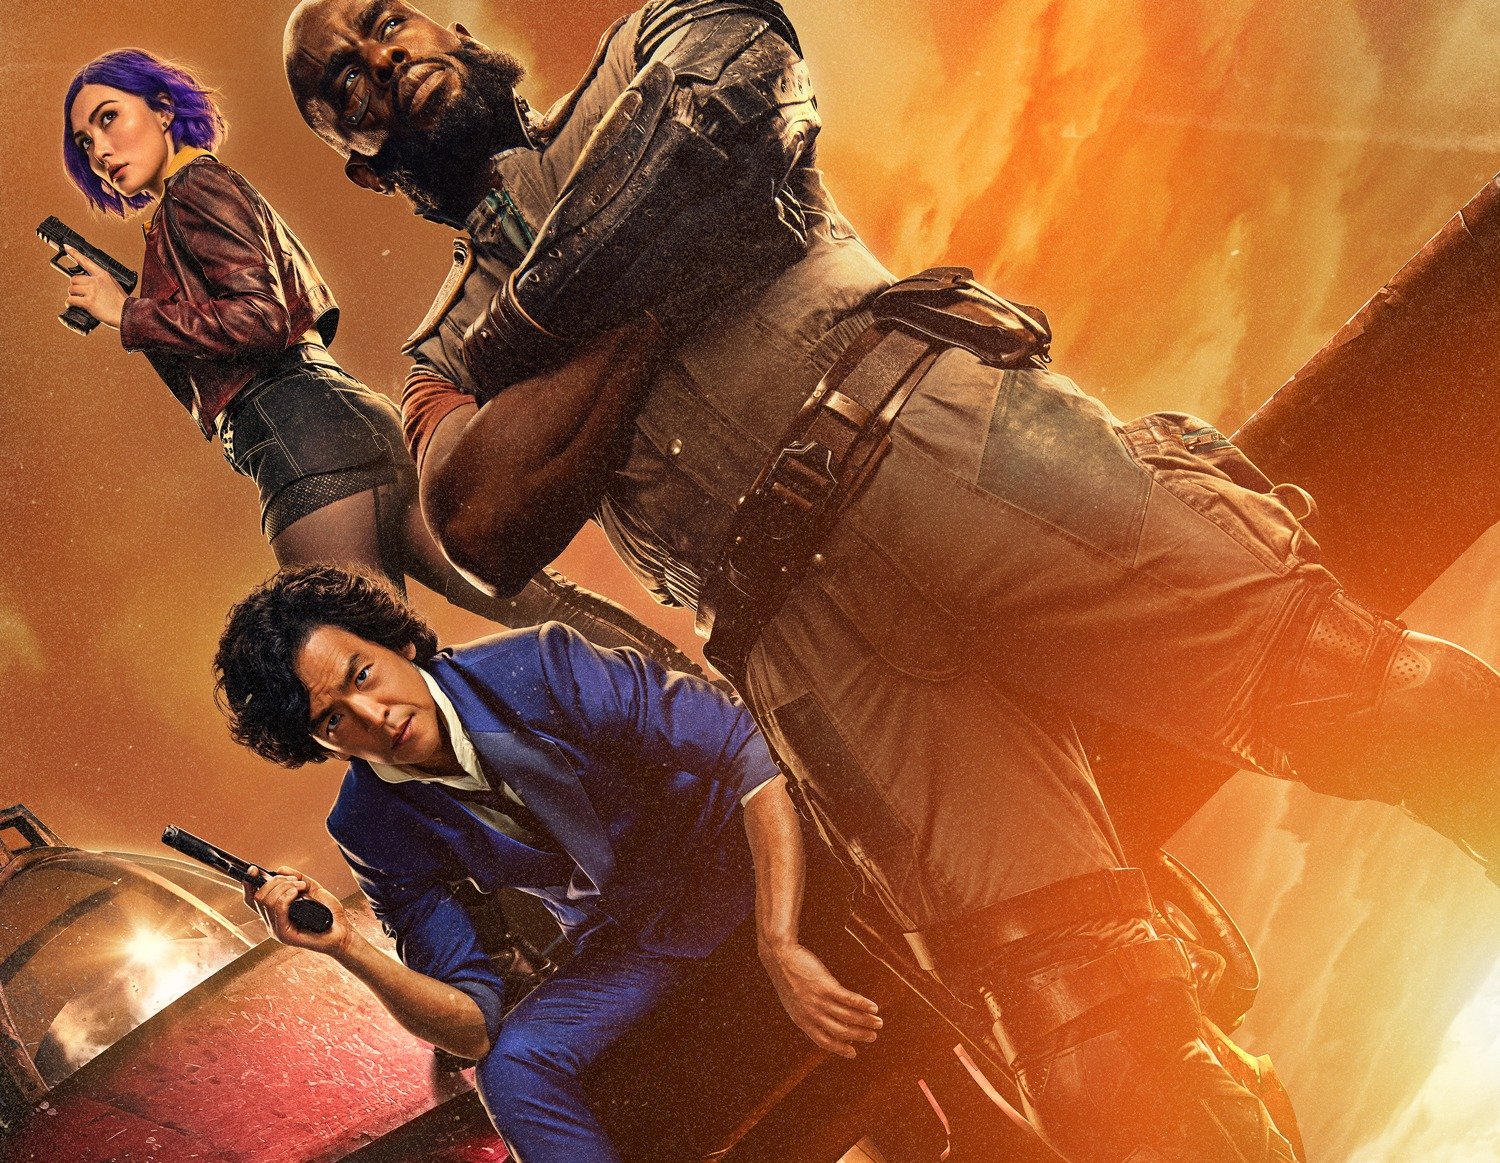 Poster art for Netflix's live-action 'Cowboy Bebop' featuring John Cho as Spike Spiegel, Daniella Pineda as Faye Valentine, and Mustafa Shakir as Jet Black